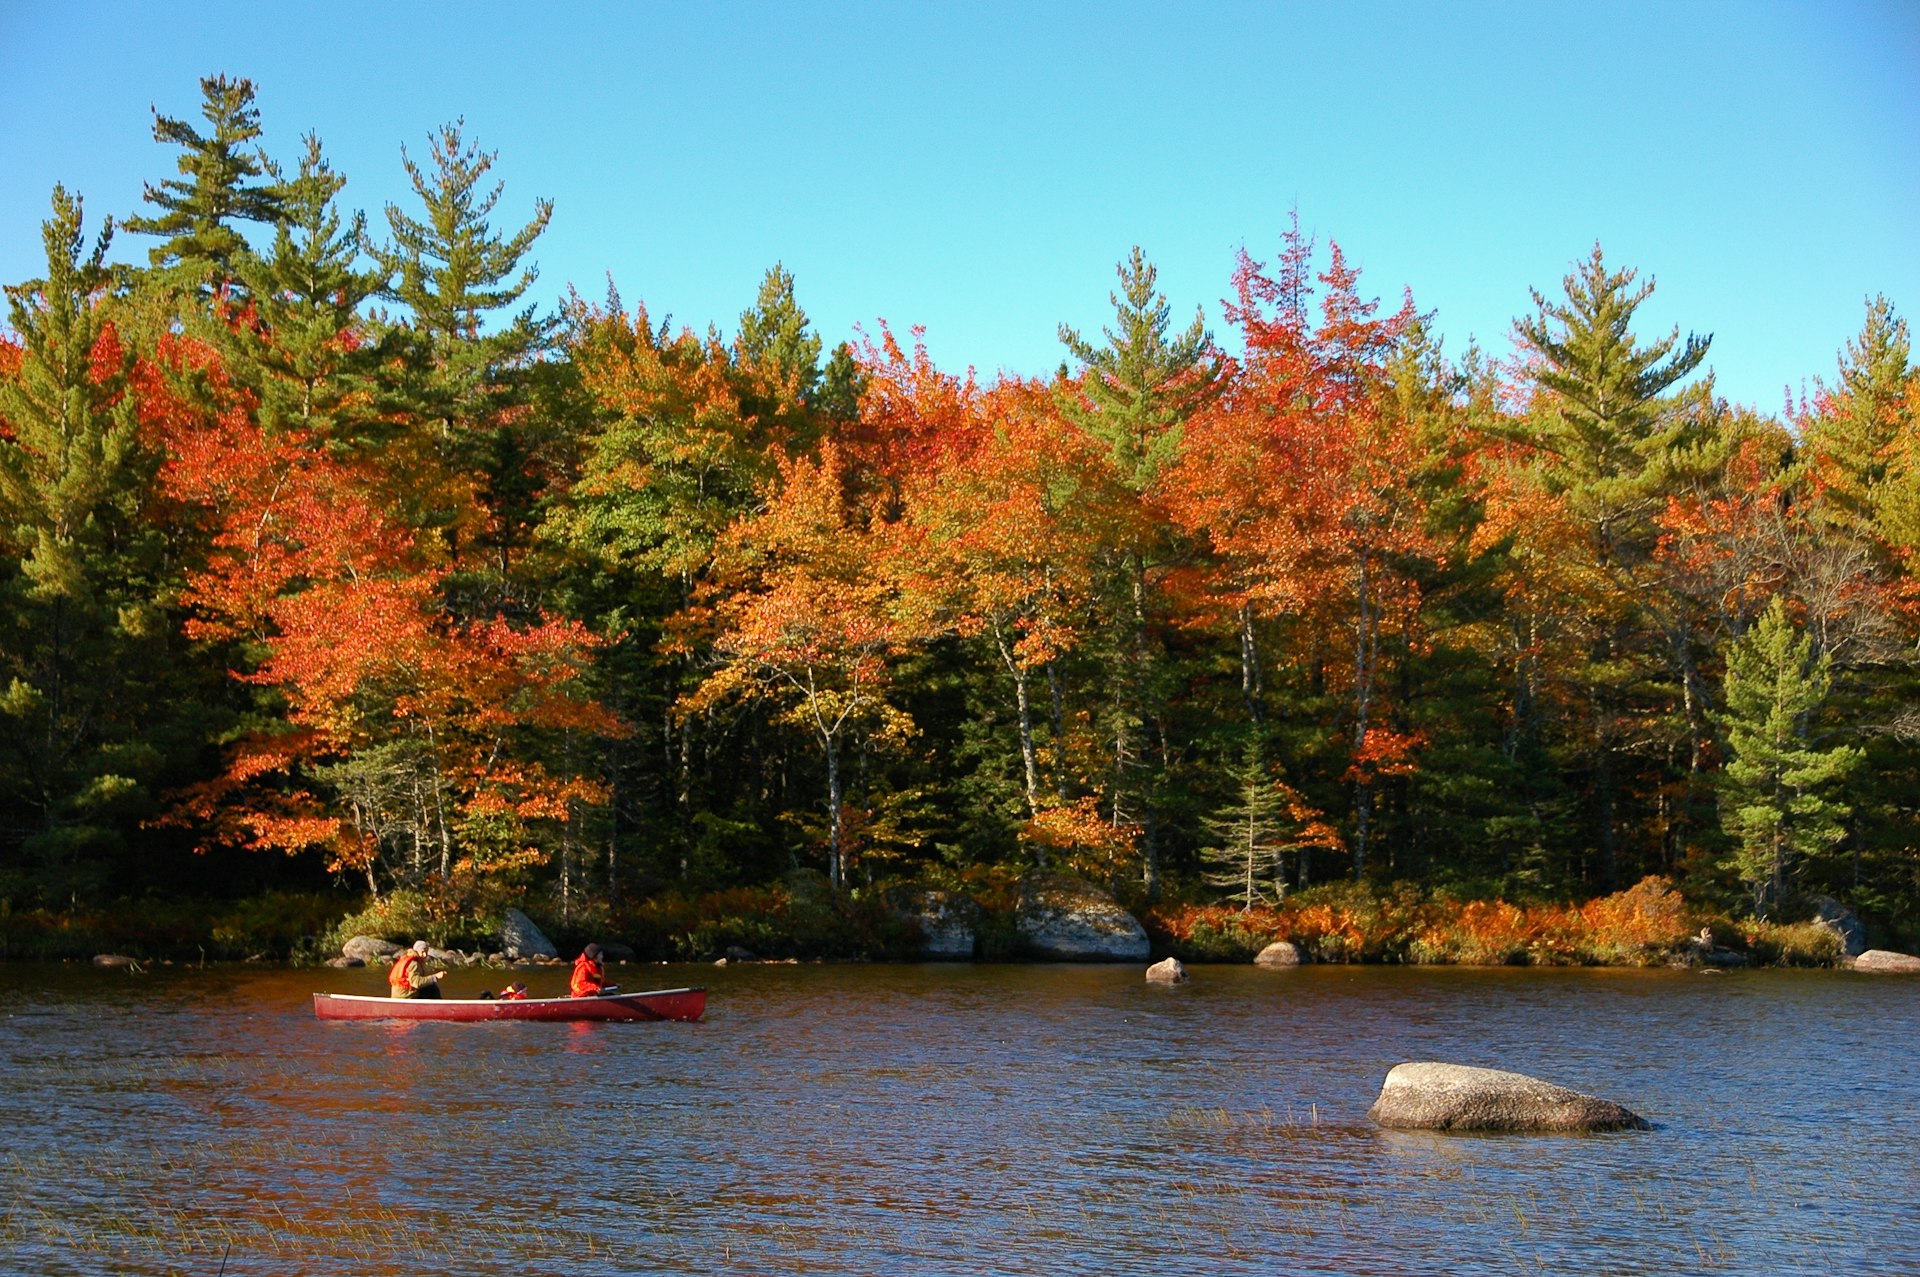 Two people paddle in a canoe through fall foliage at Kejimkujik National Park, Nova Scotia, Canada